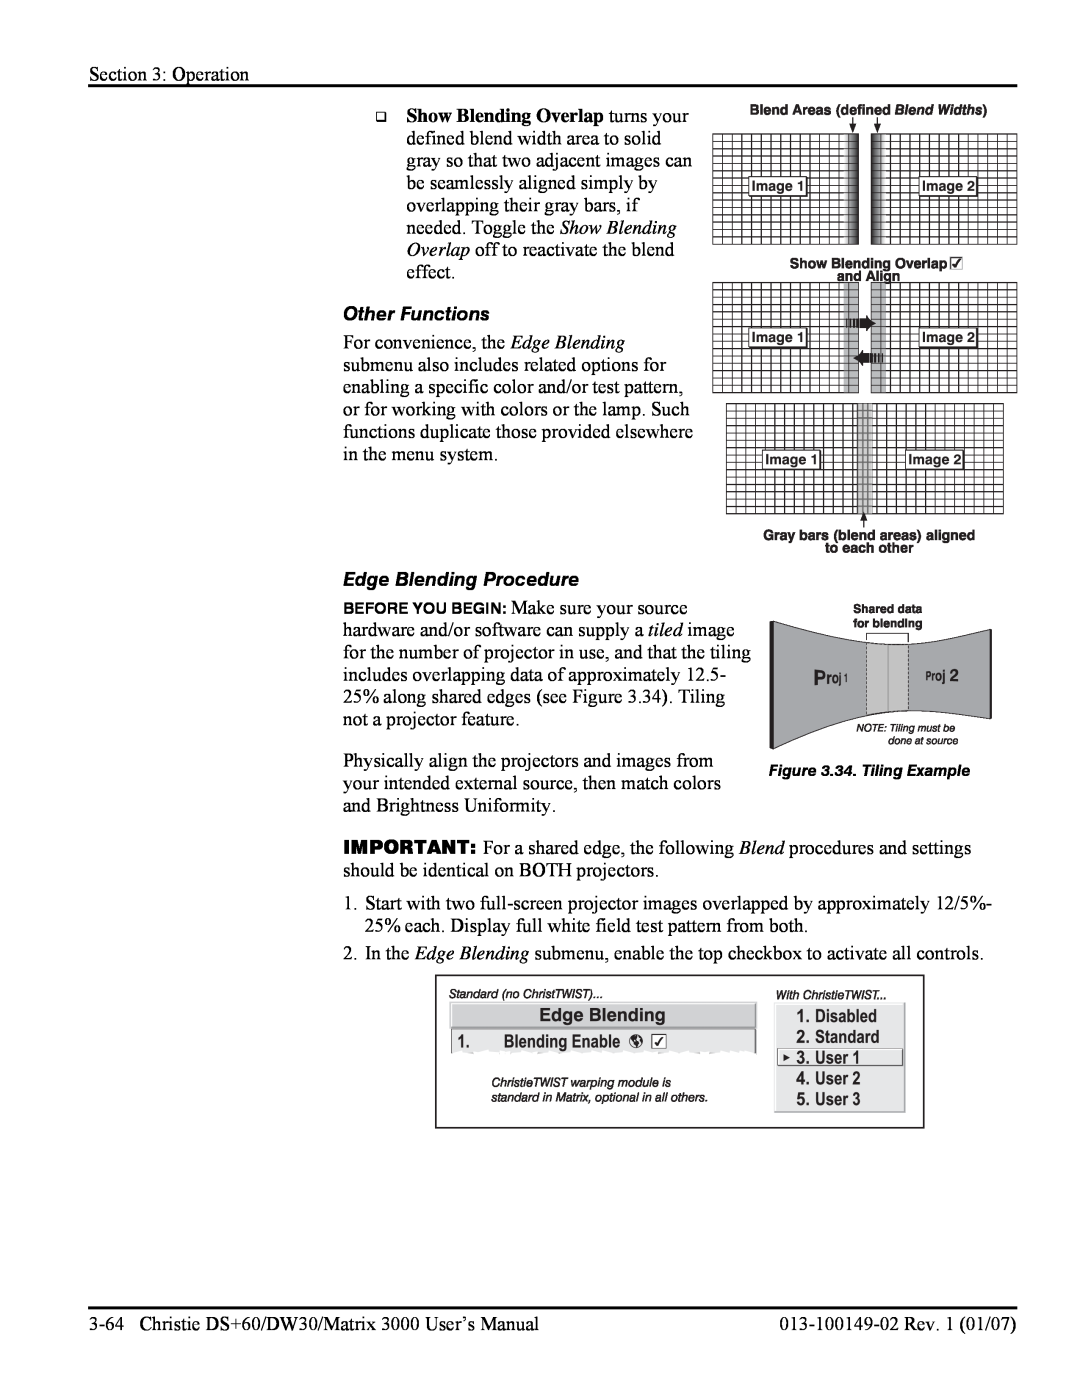 Texas Instruments DW30, MATRIX 3000 user manual Other Functions, Edge Blending Procedure, 34. Tiling Example 